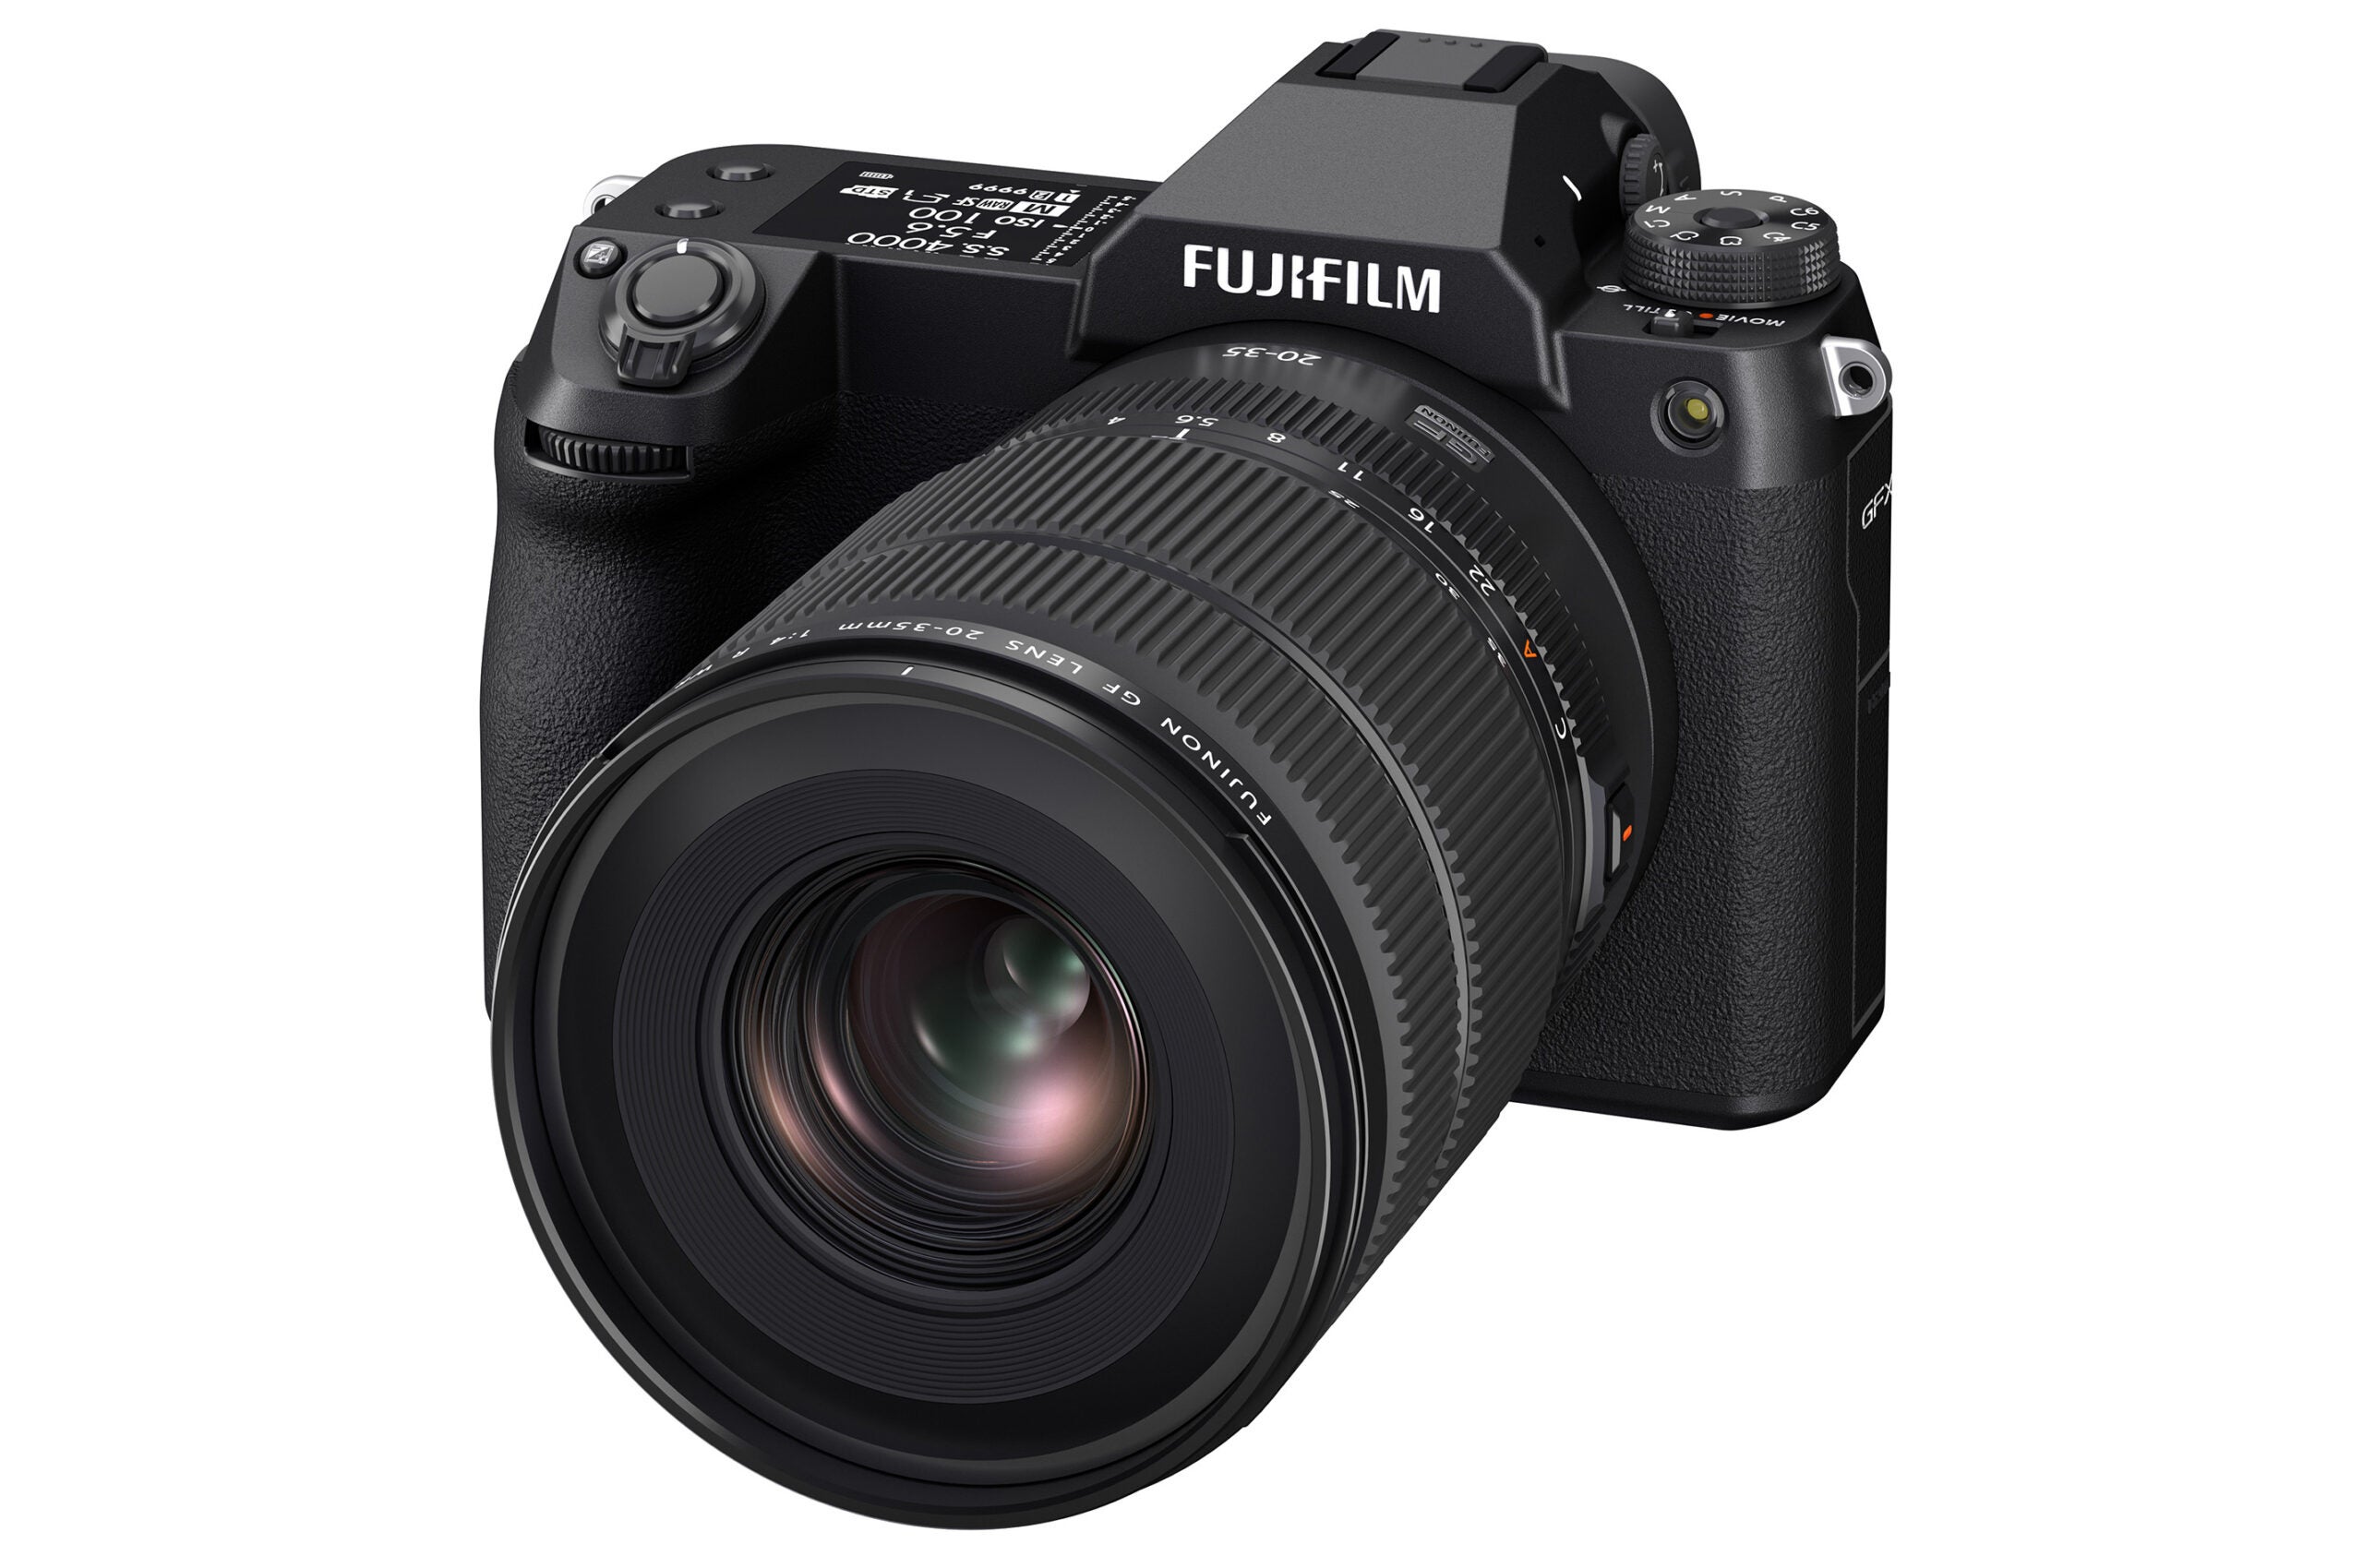 The new Fujifilm GF 20-35mm f/4 R WR lens